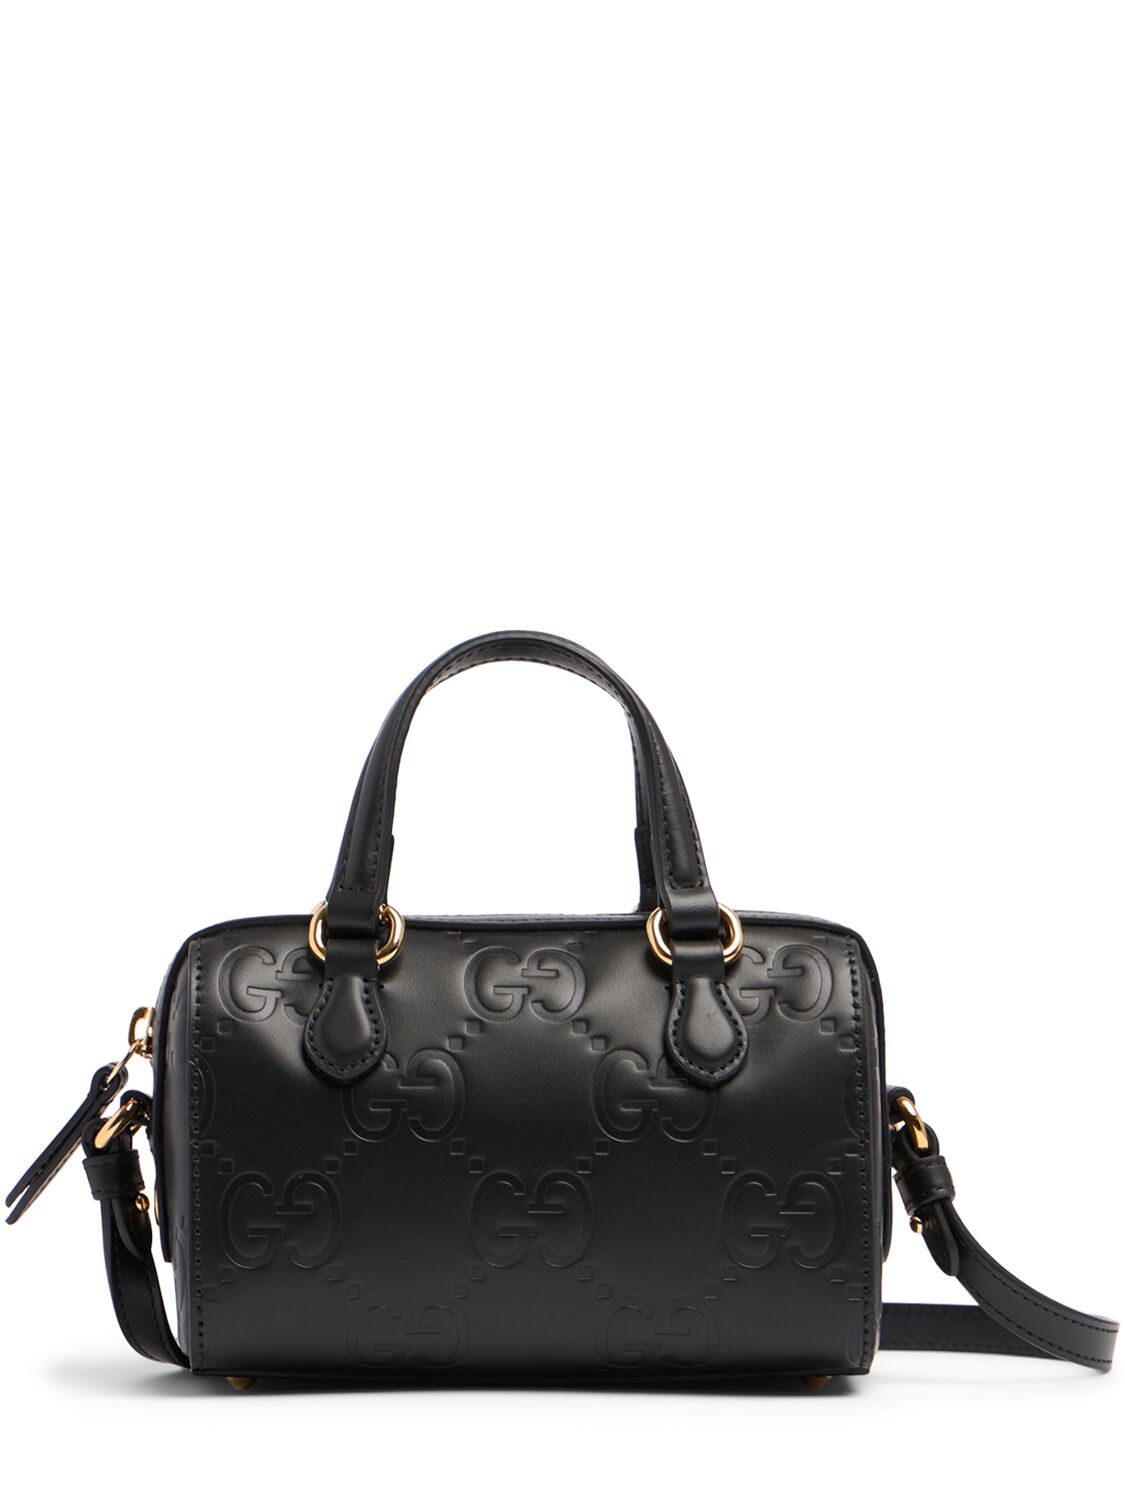 Gucci Mini Gg Leather Shoulder Bag In Black